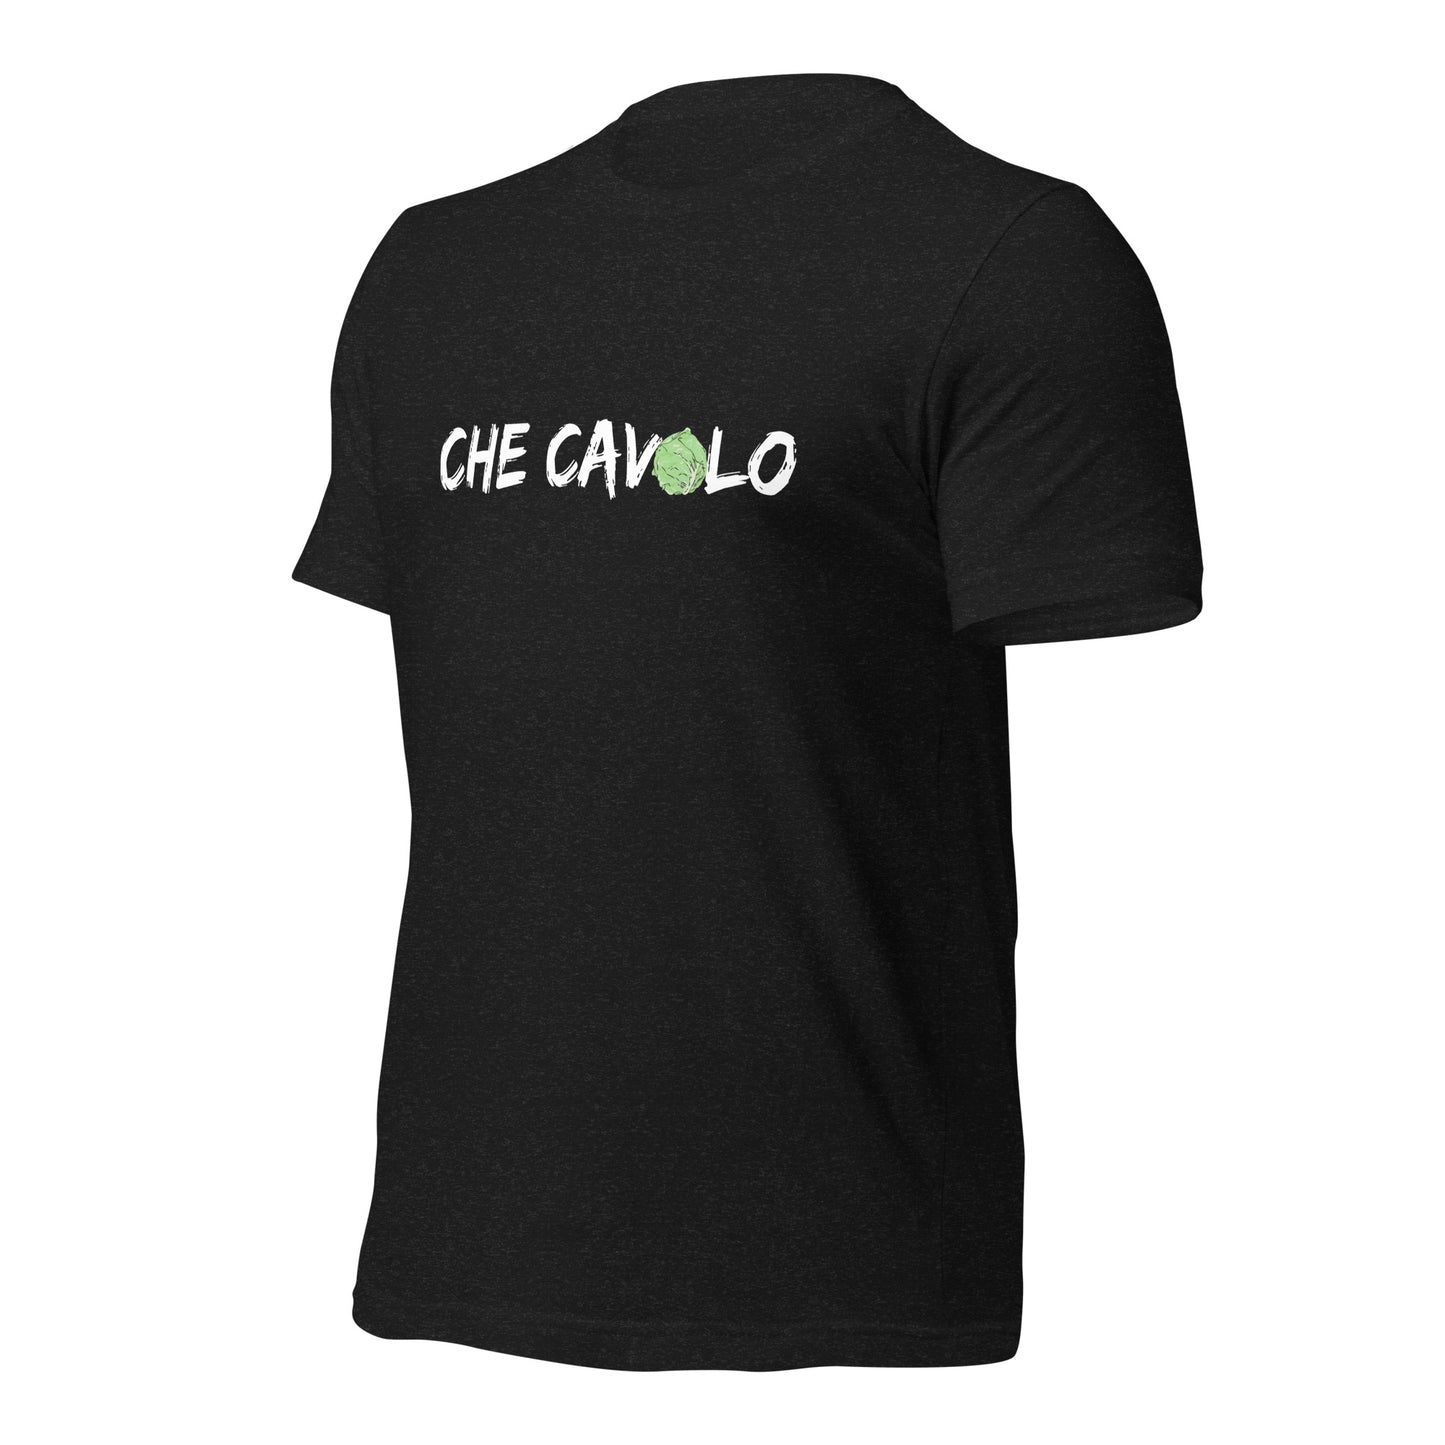 Che Cavolo - Unisex t-shirt